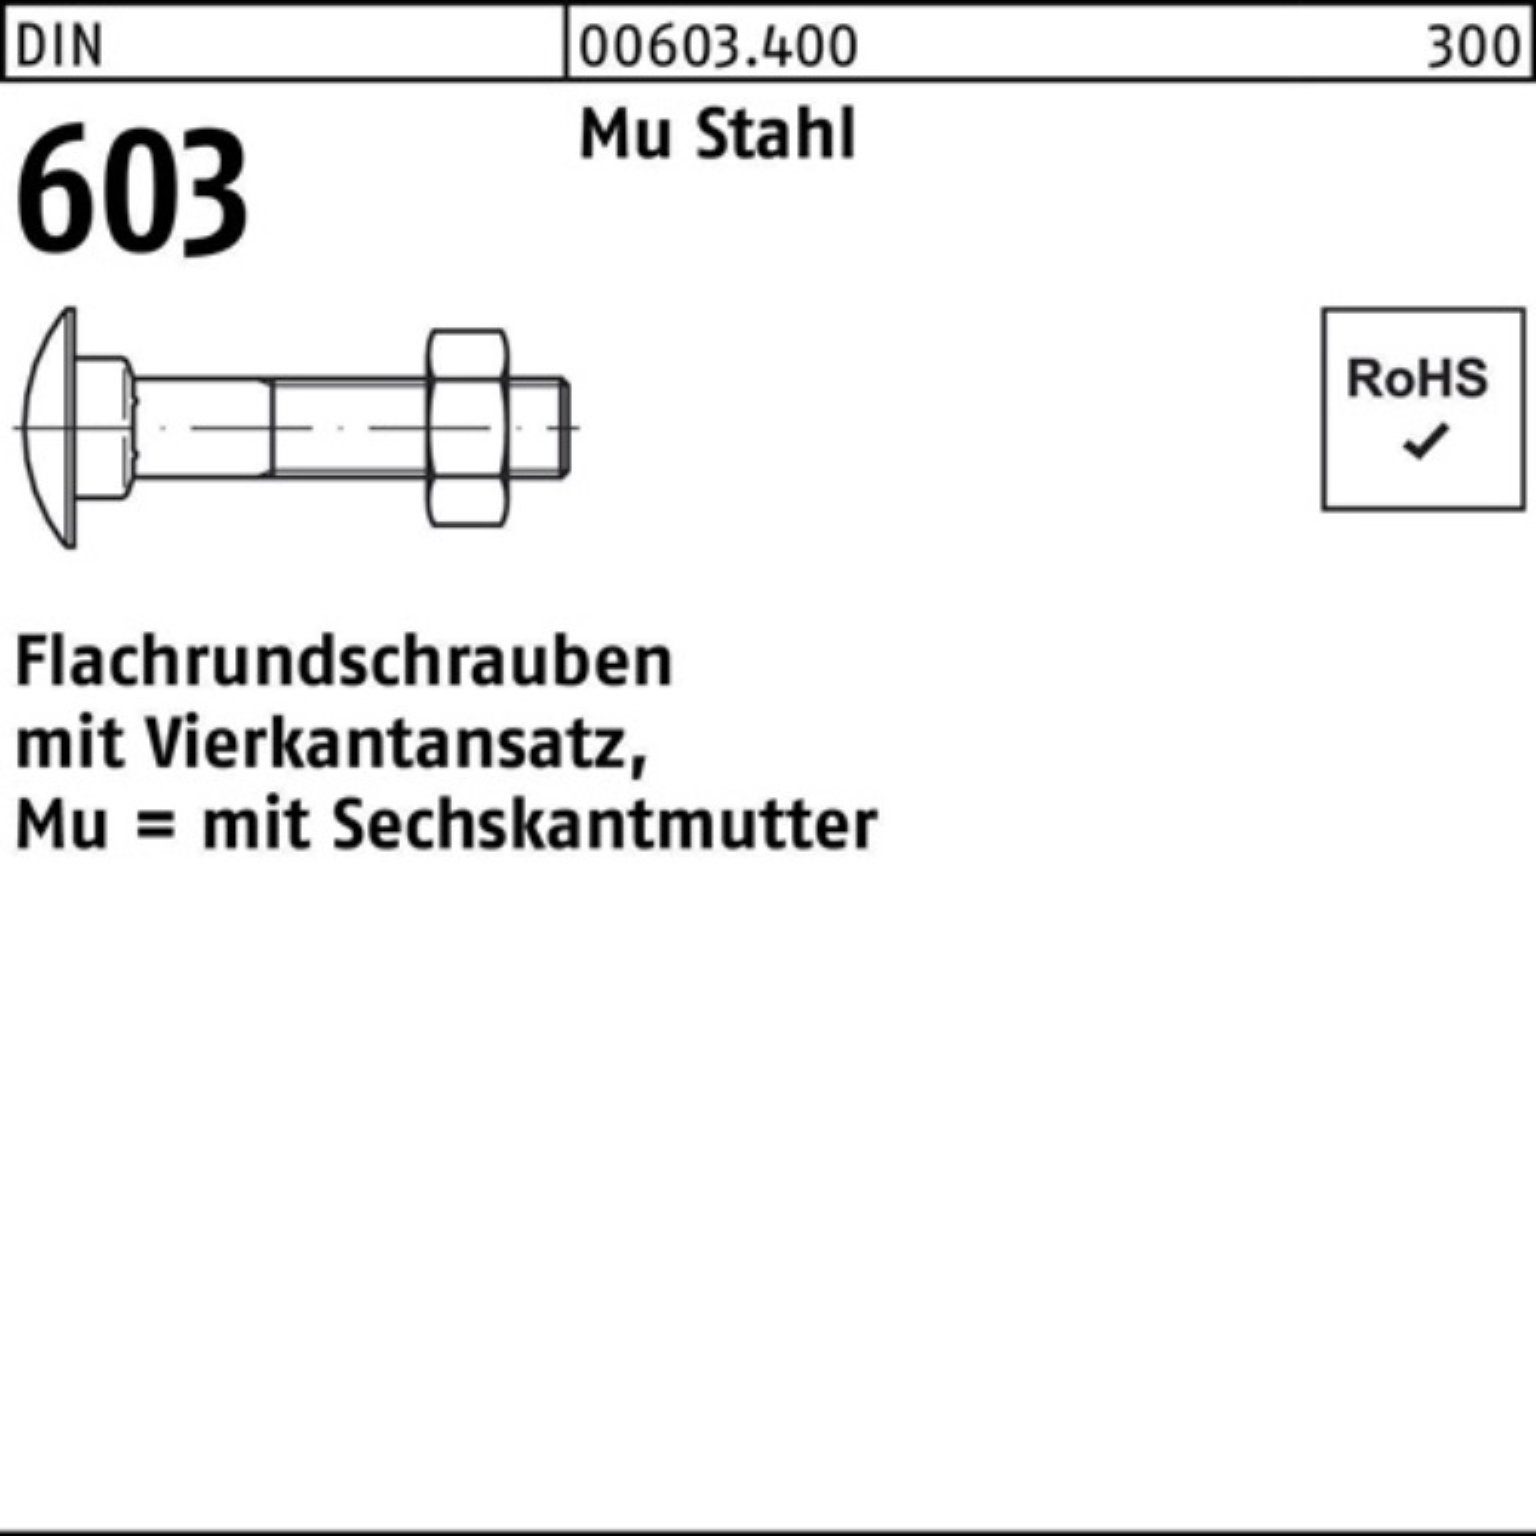 100er Schraube Pack Vierkantansatz/6-ktmutter 603 DIN Flachrundschraube Reyher M10x180